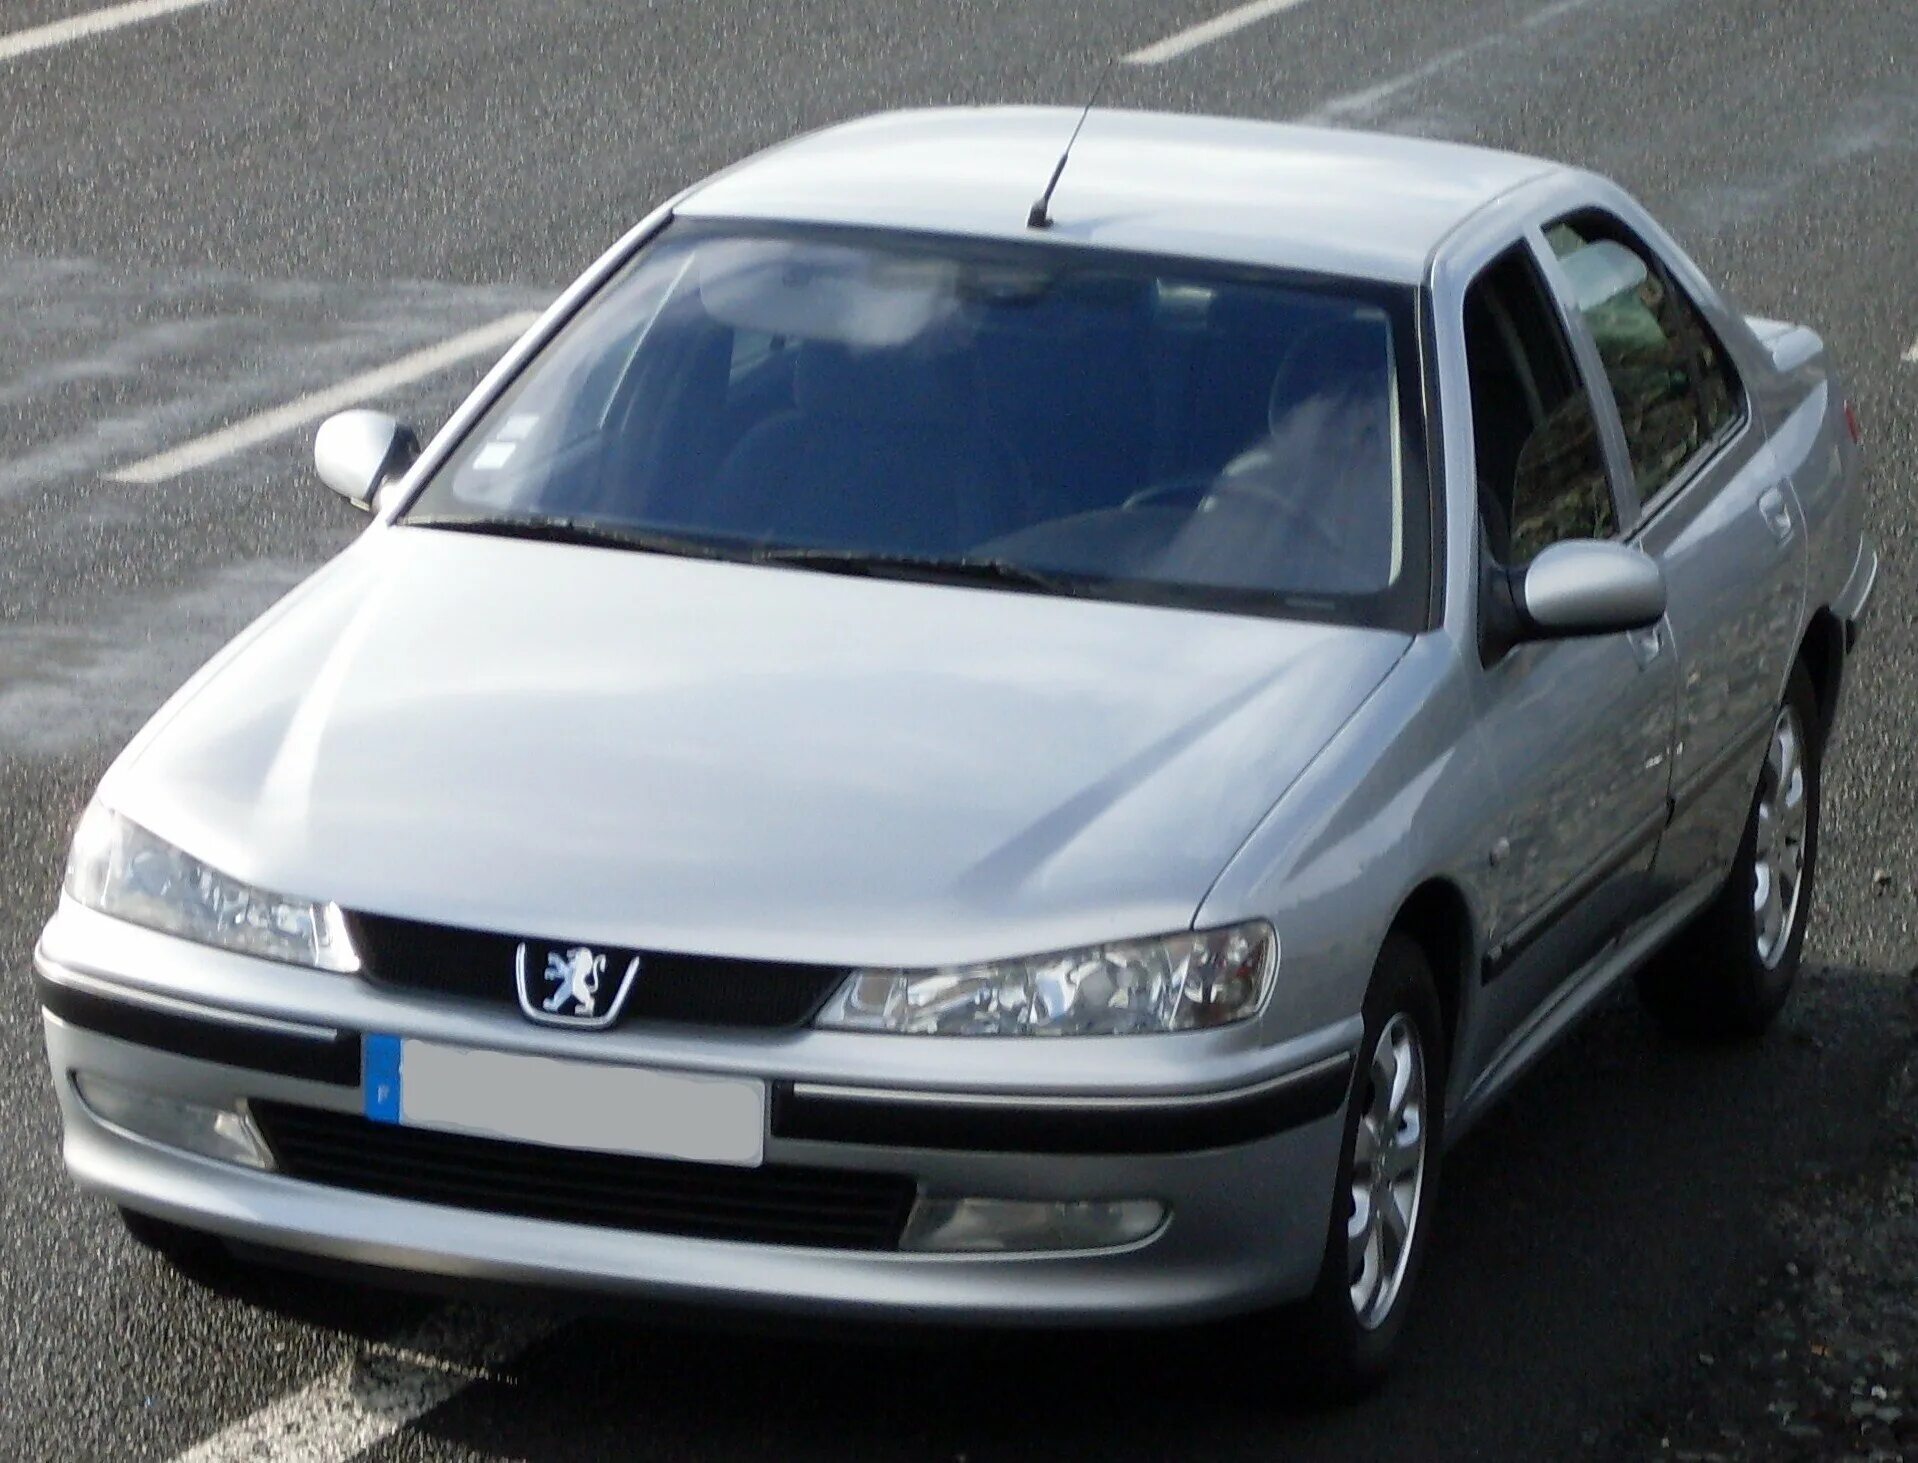 Peugeot 406. Пежо 406 седан. Peugeot 406 седан 1999-2004. Пежо 406 2.0. Пежо 406 купить 2 2